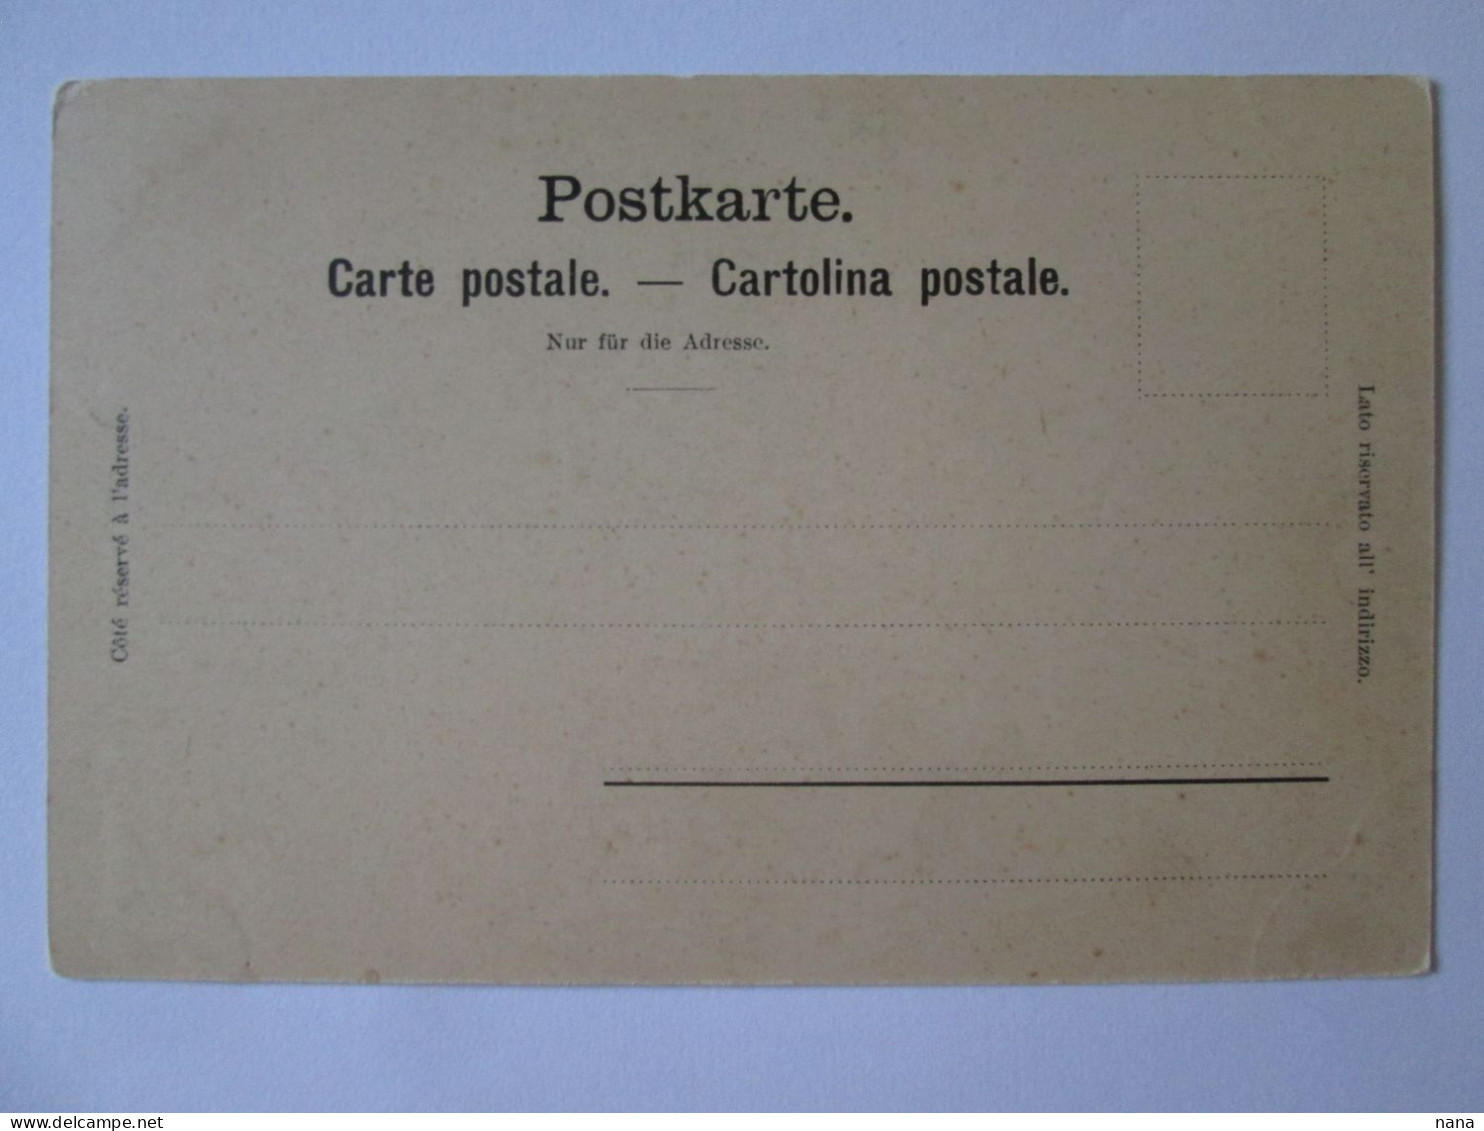 Suisse/Switzerland-Giornico:Les Trois Lignes De Chemin De Fer Carte Pos.1899/The Three Railway Lines Postcard 1899 - Giornico